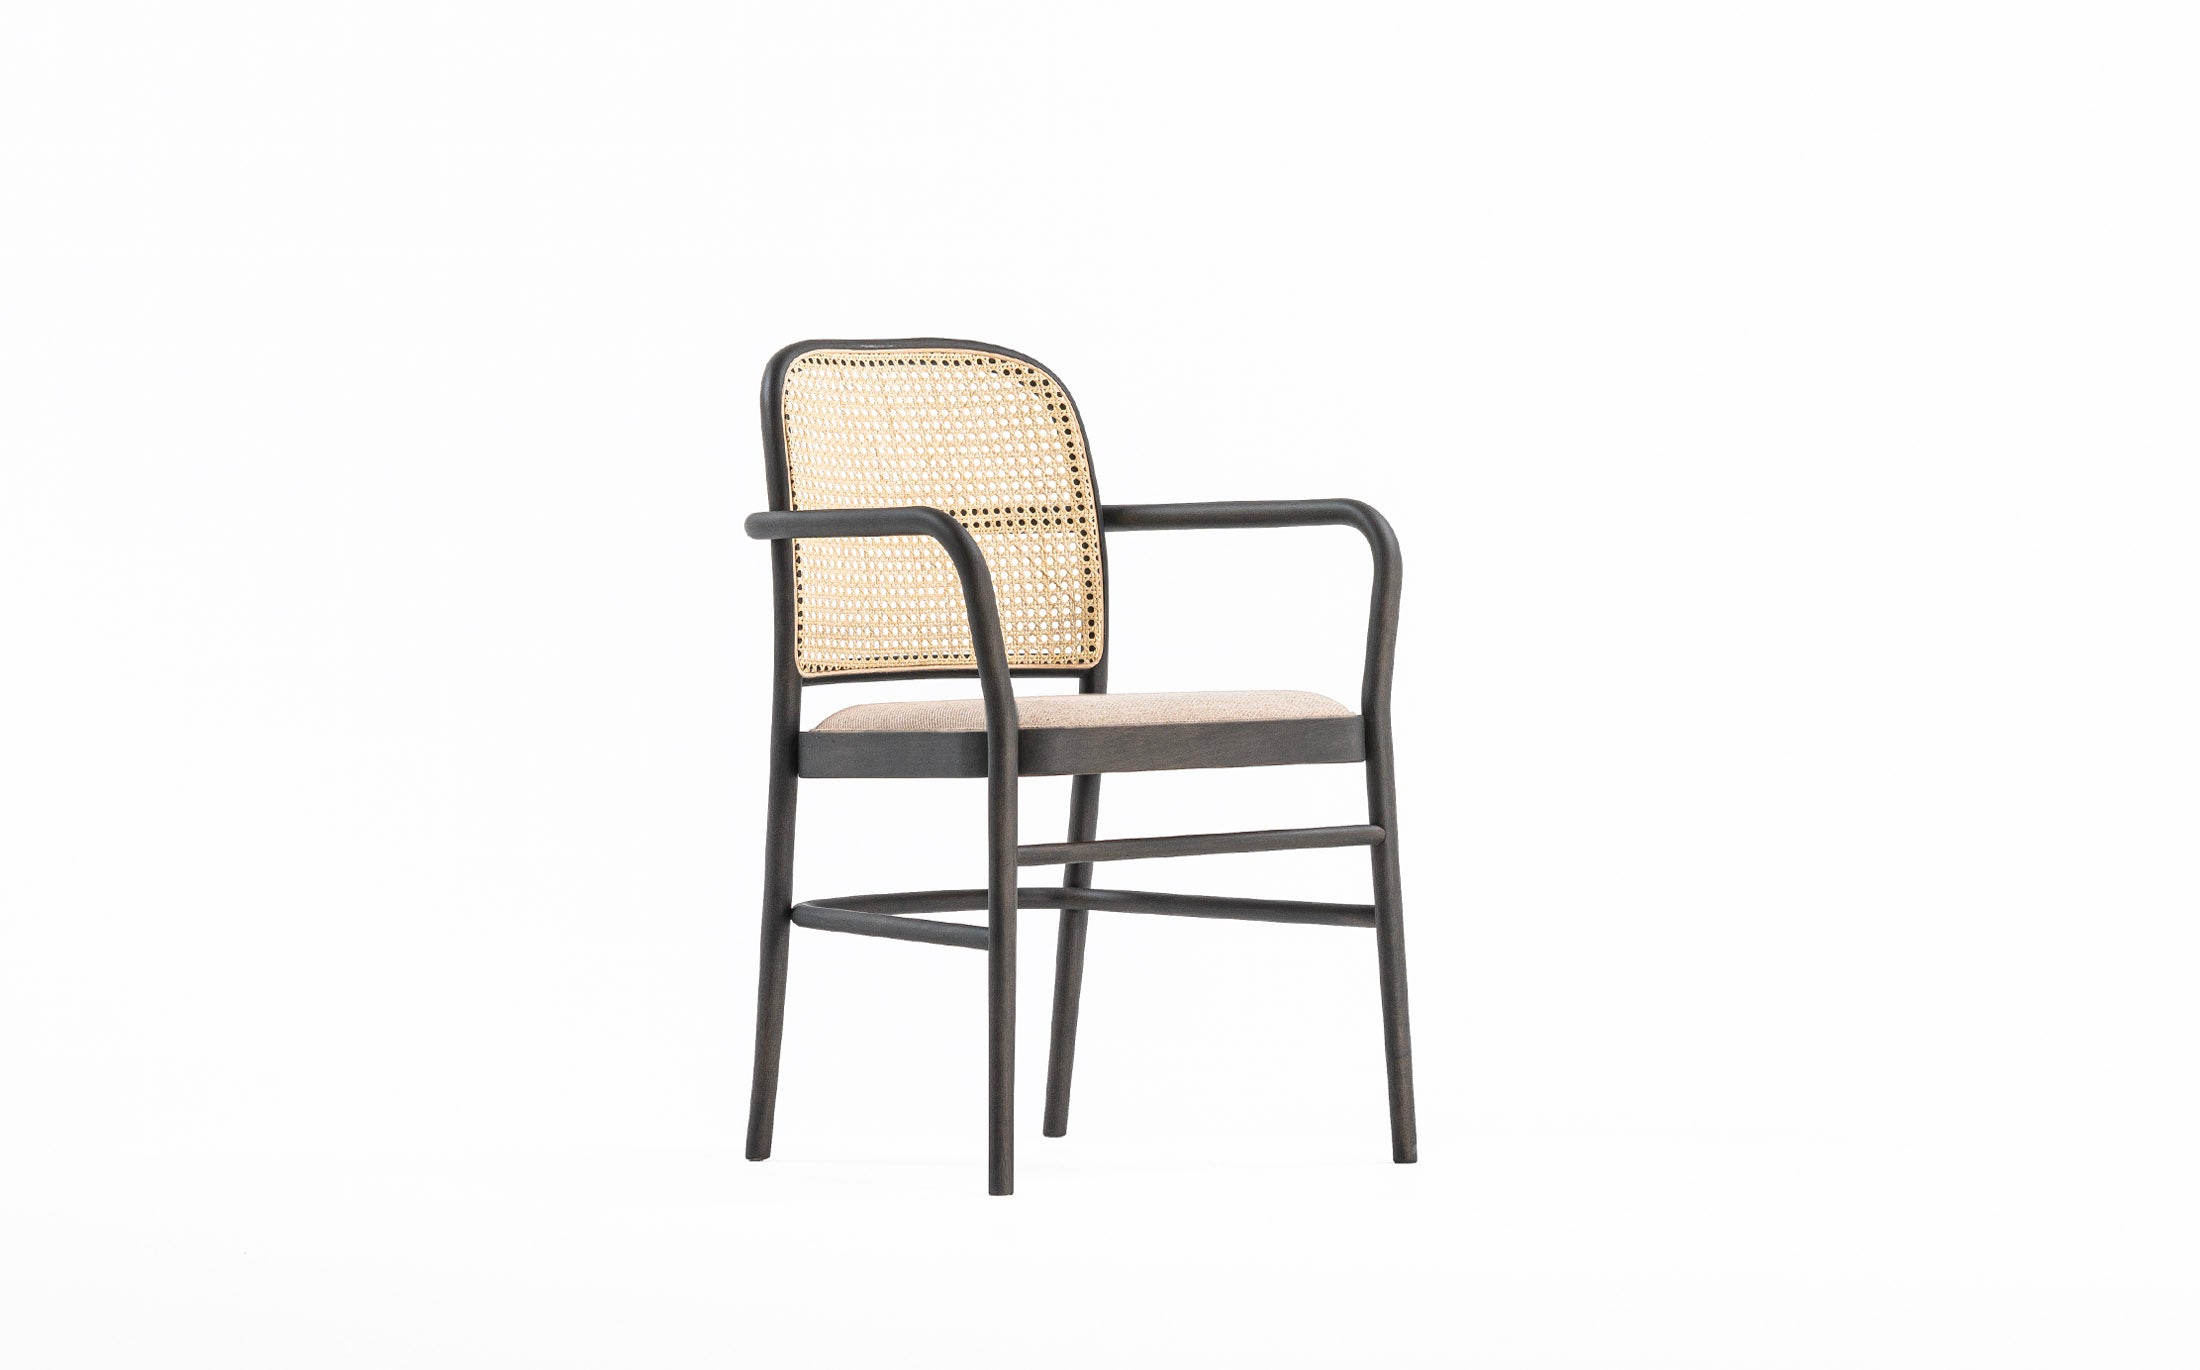 The bent armchair #Seat materials_fabric1 bergen 05/09